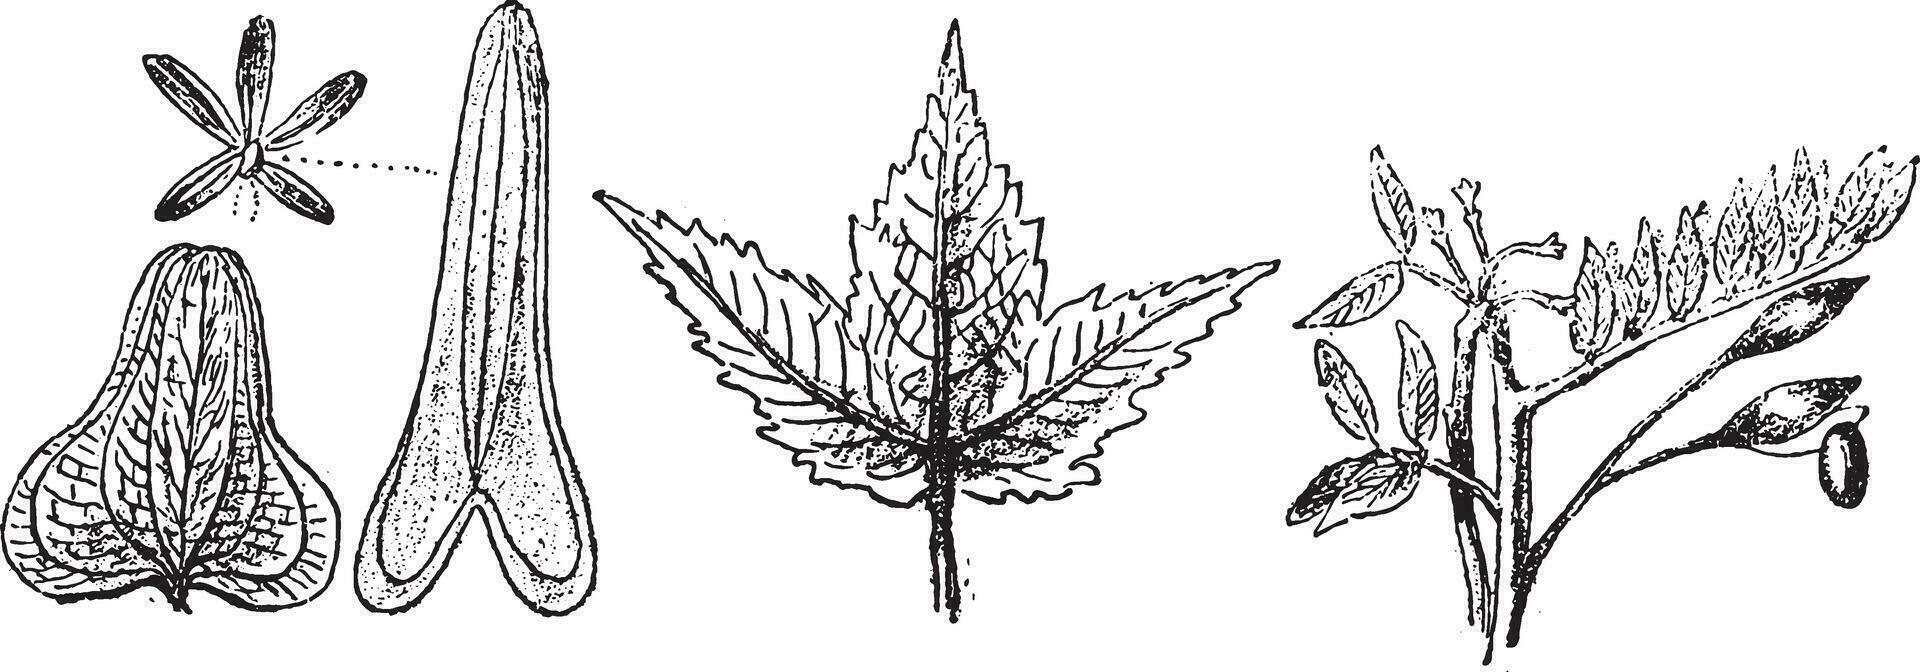 Smilax obtusifolia, Smilax sagittifera, Acer trilobatum of the miocene marls of Ceningen, vintage engraving. vector